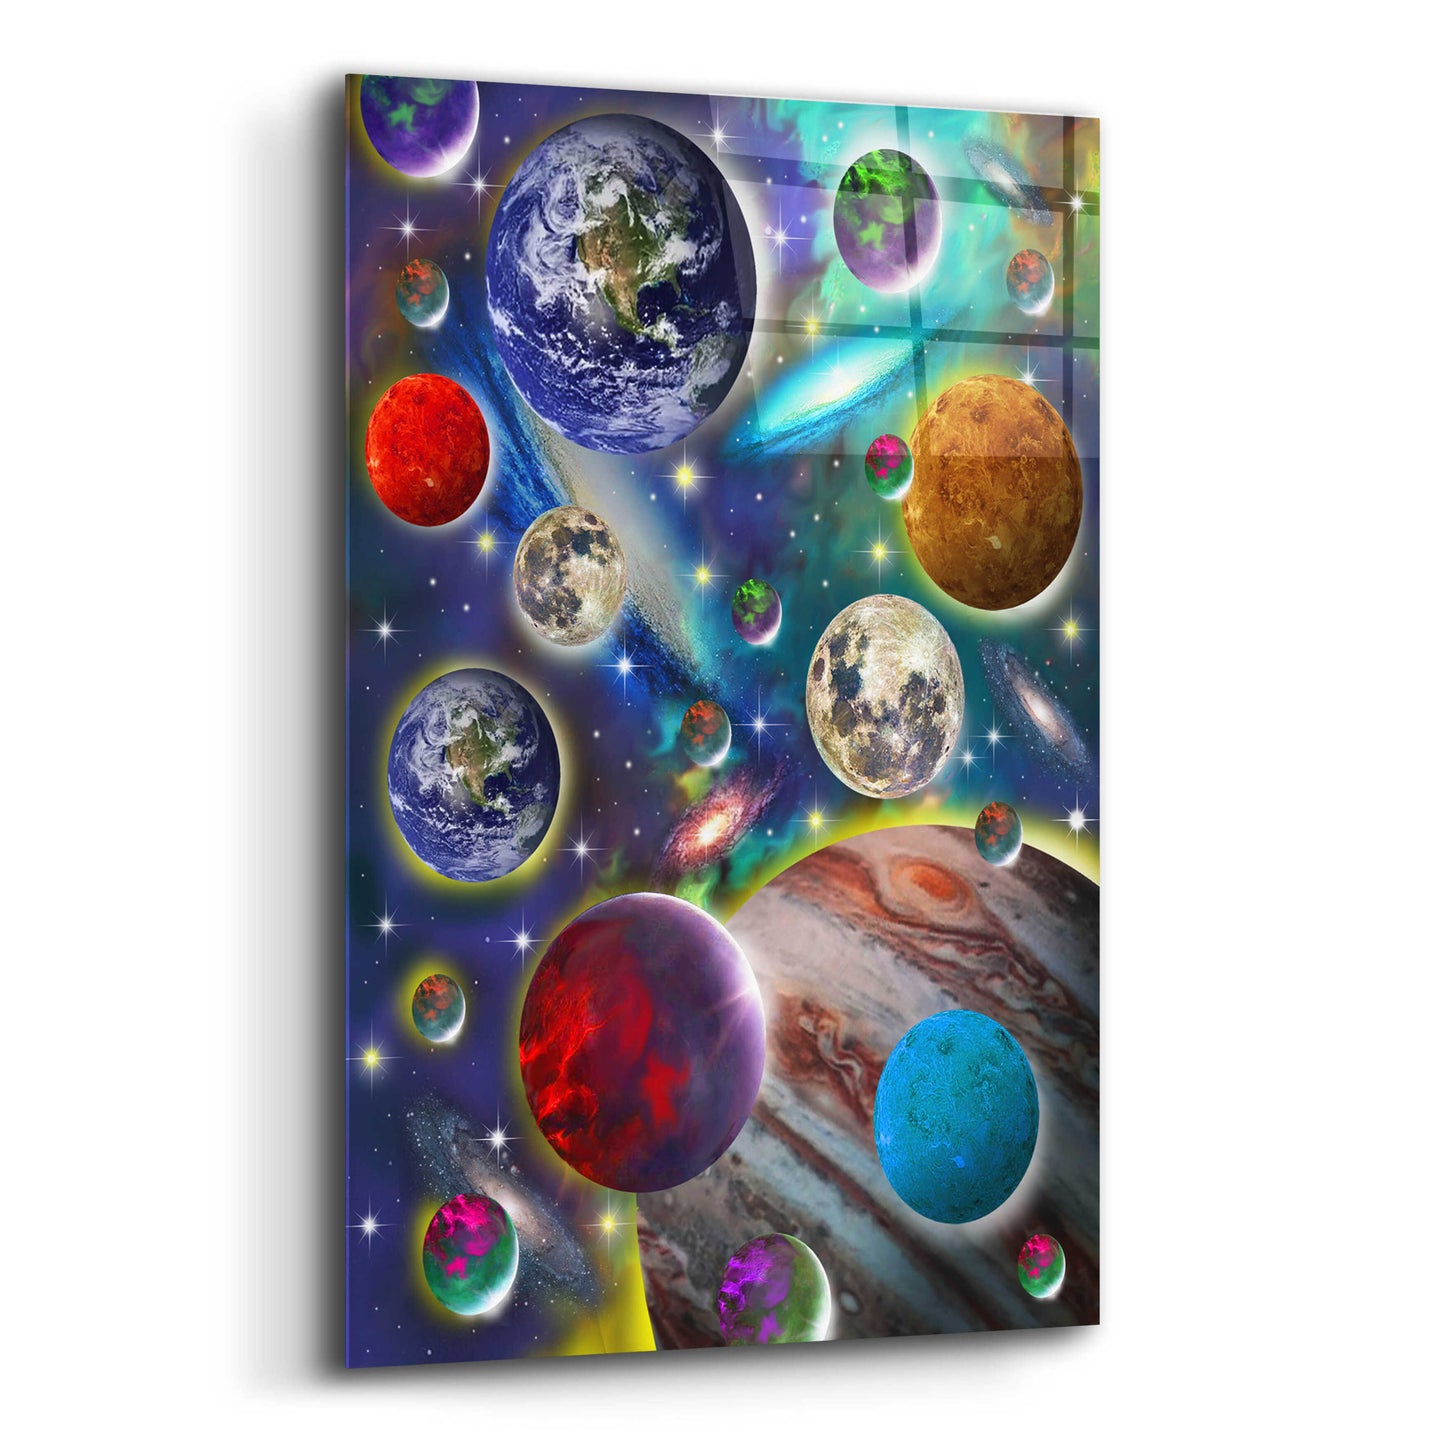 Epic Art 'Cosmic Planets' by Enright, Acrylic Glass Wall Art,12x16